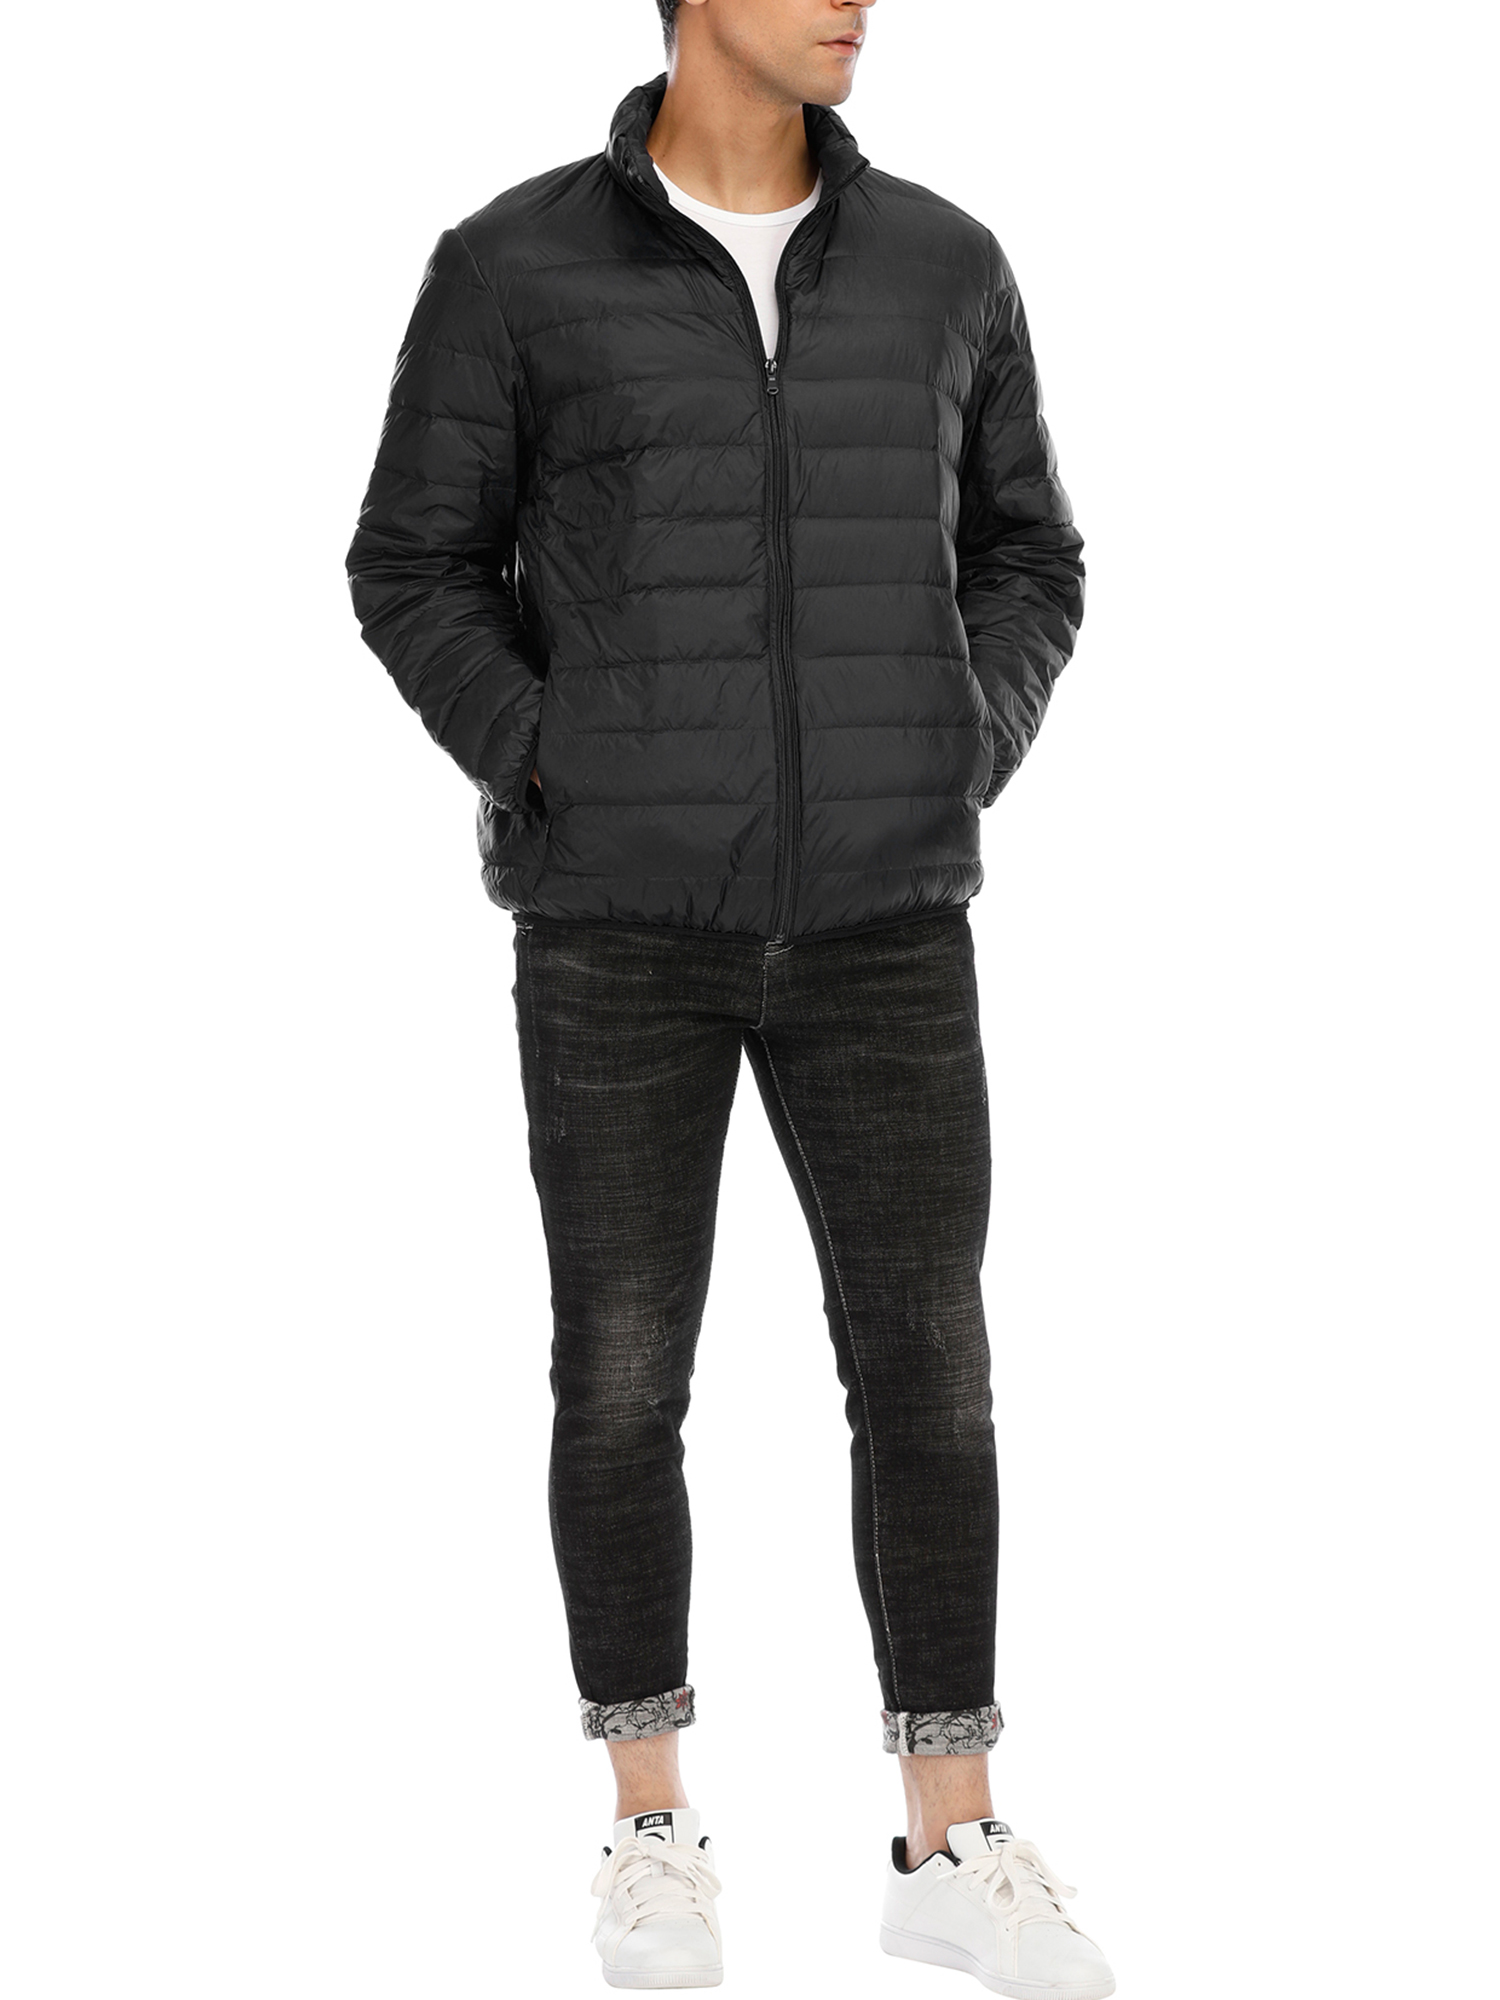 SAYFUT Men's Down Winter Packable Jacket Big & Tall Sizes M-4XL Outwear Jacket Coat Black/Blue/Gray - image 2 of 8